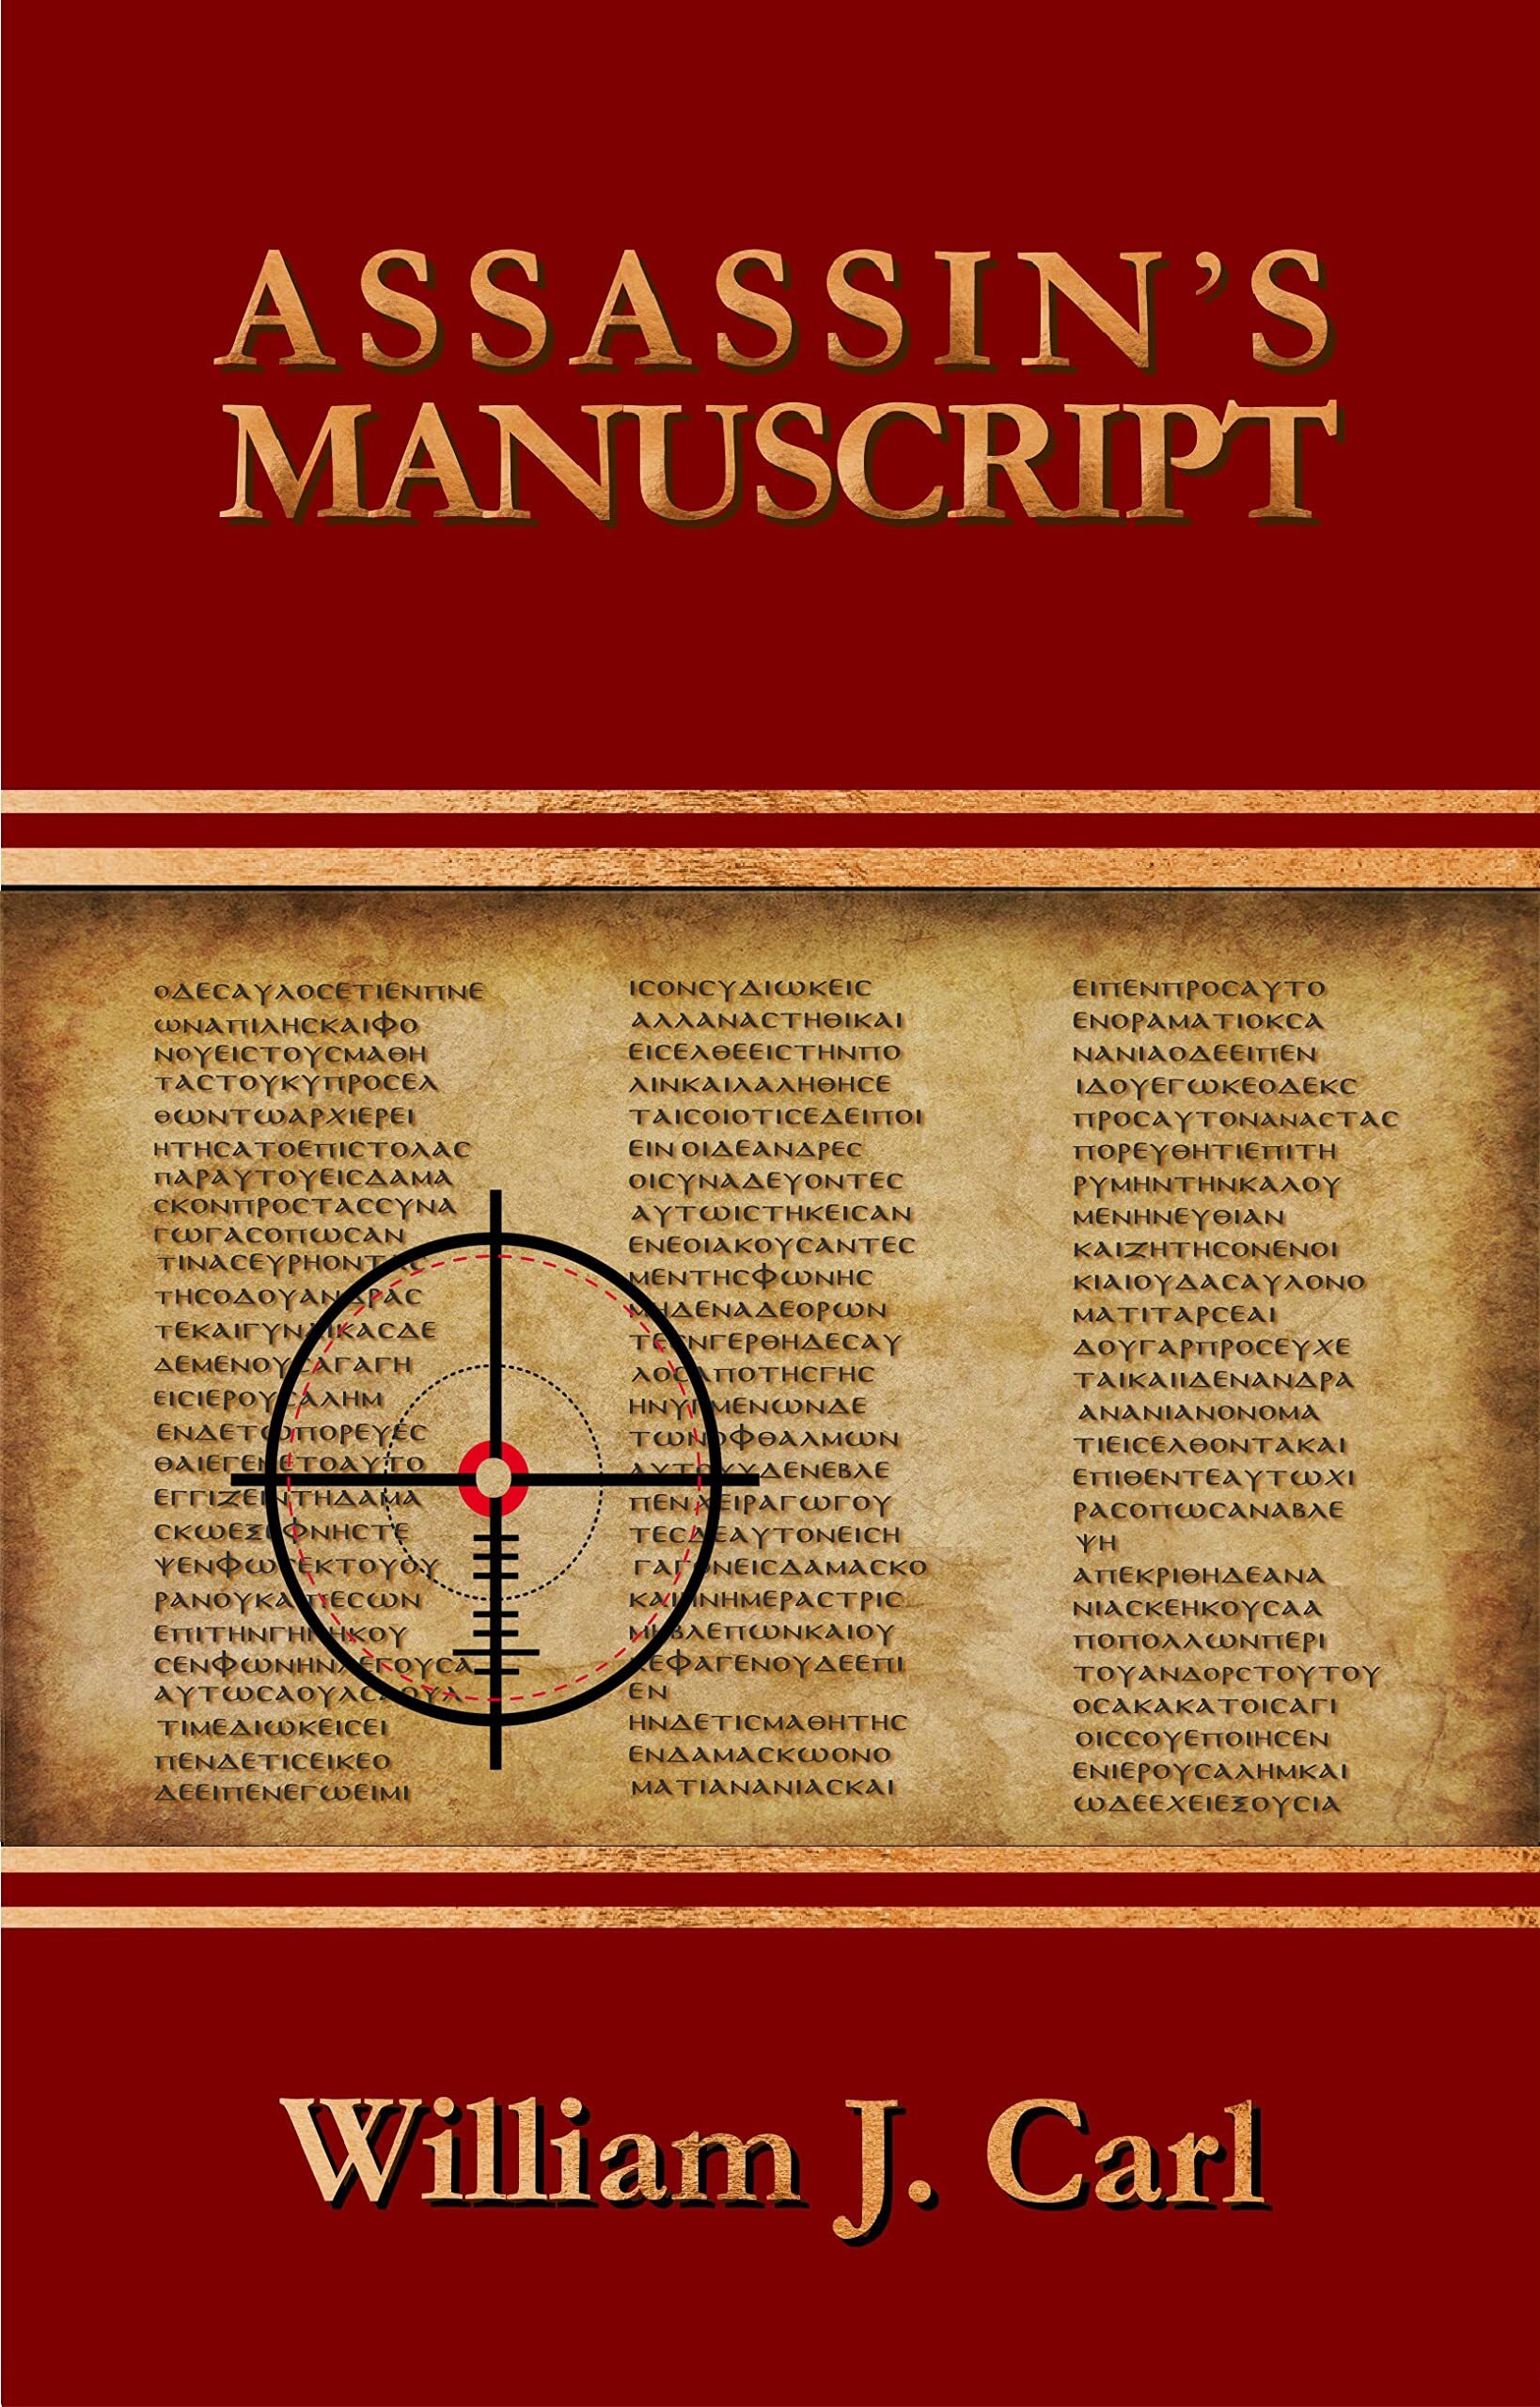 Assassins_manuscript_cover.jpg